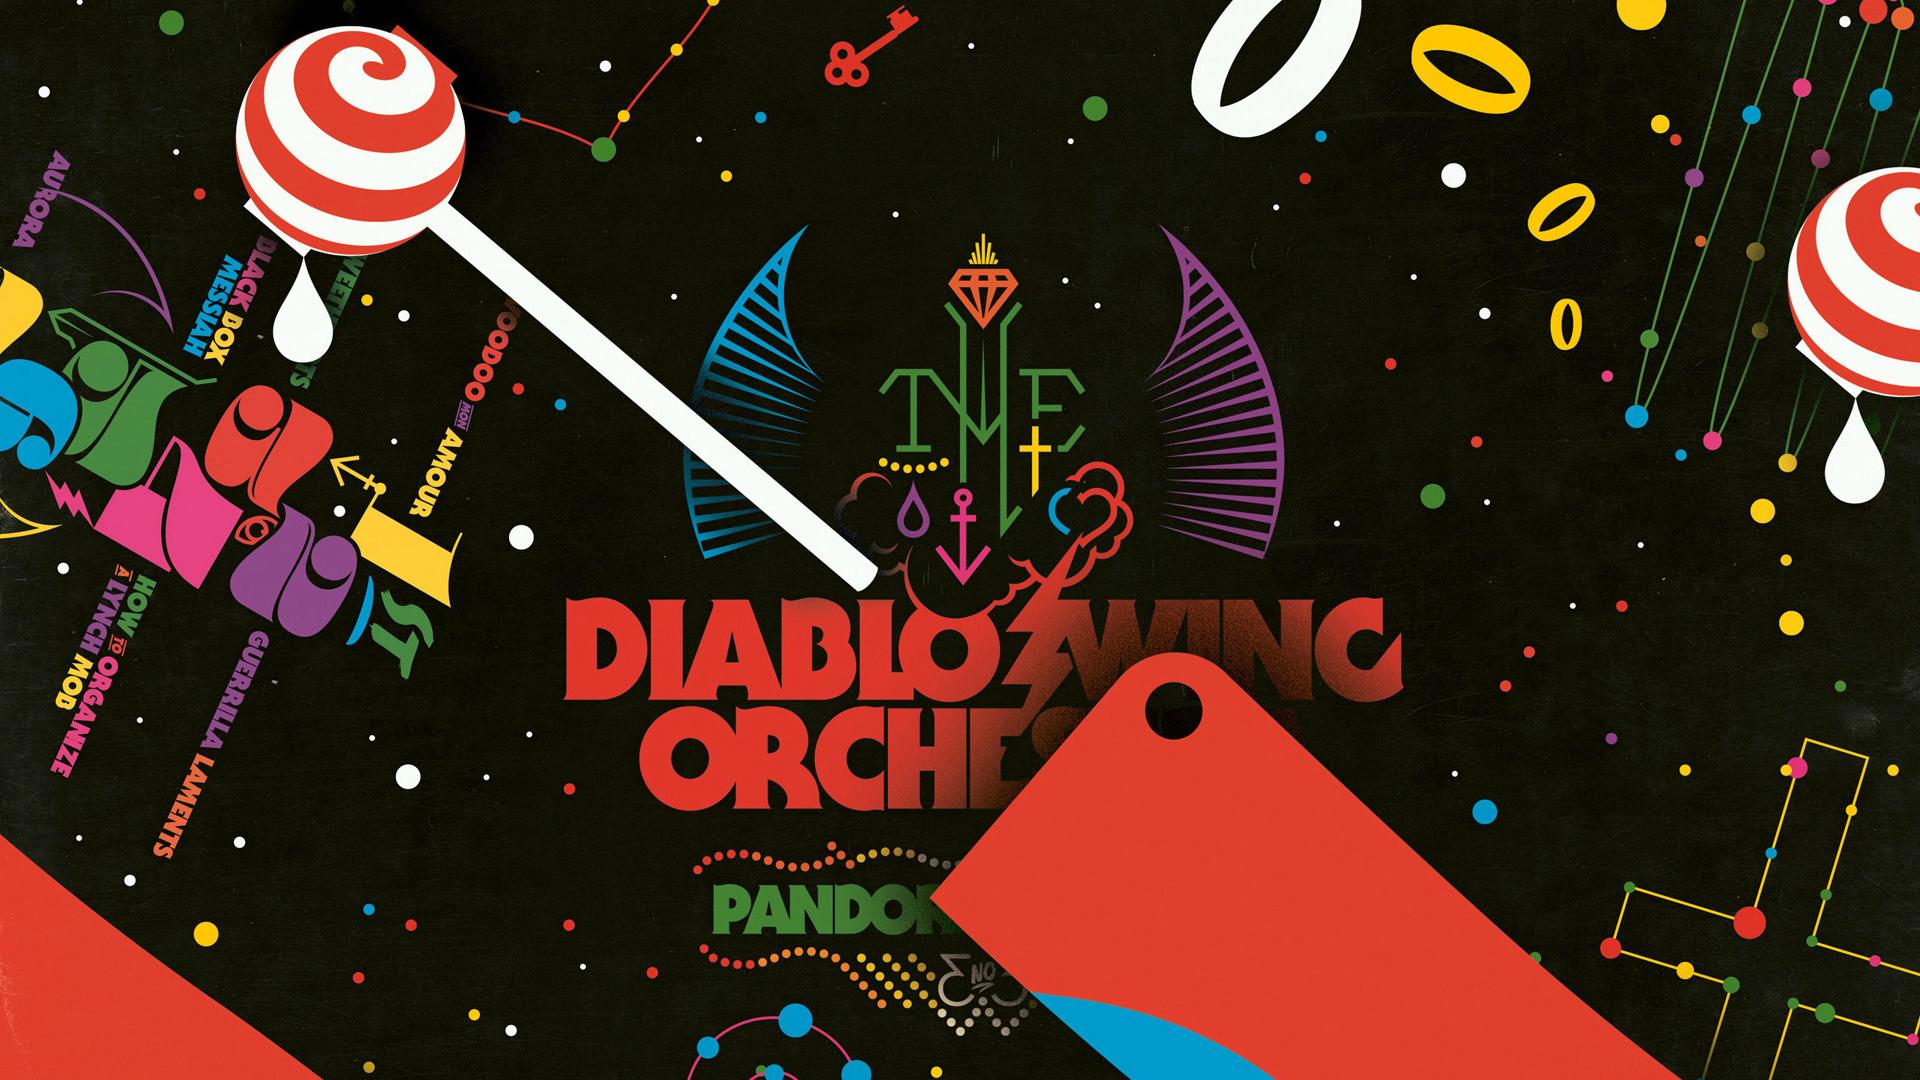 Diablo Swing Orchestra #23